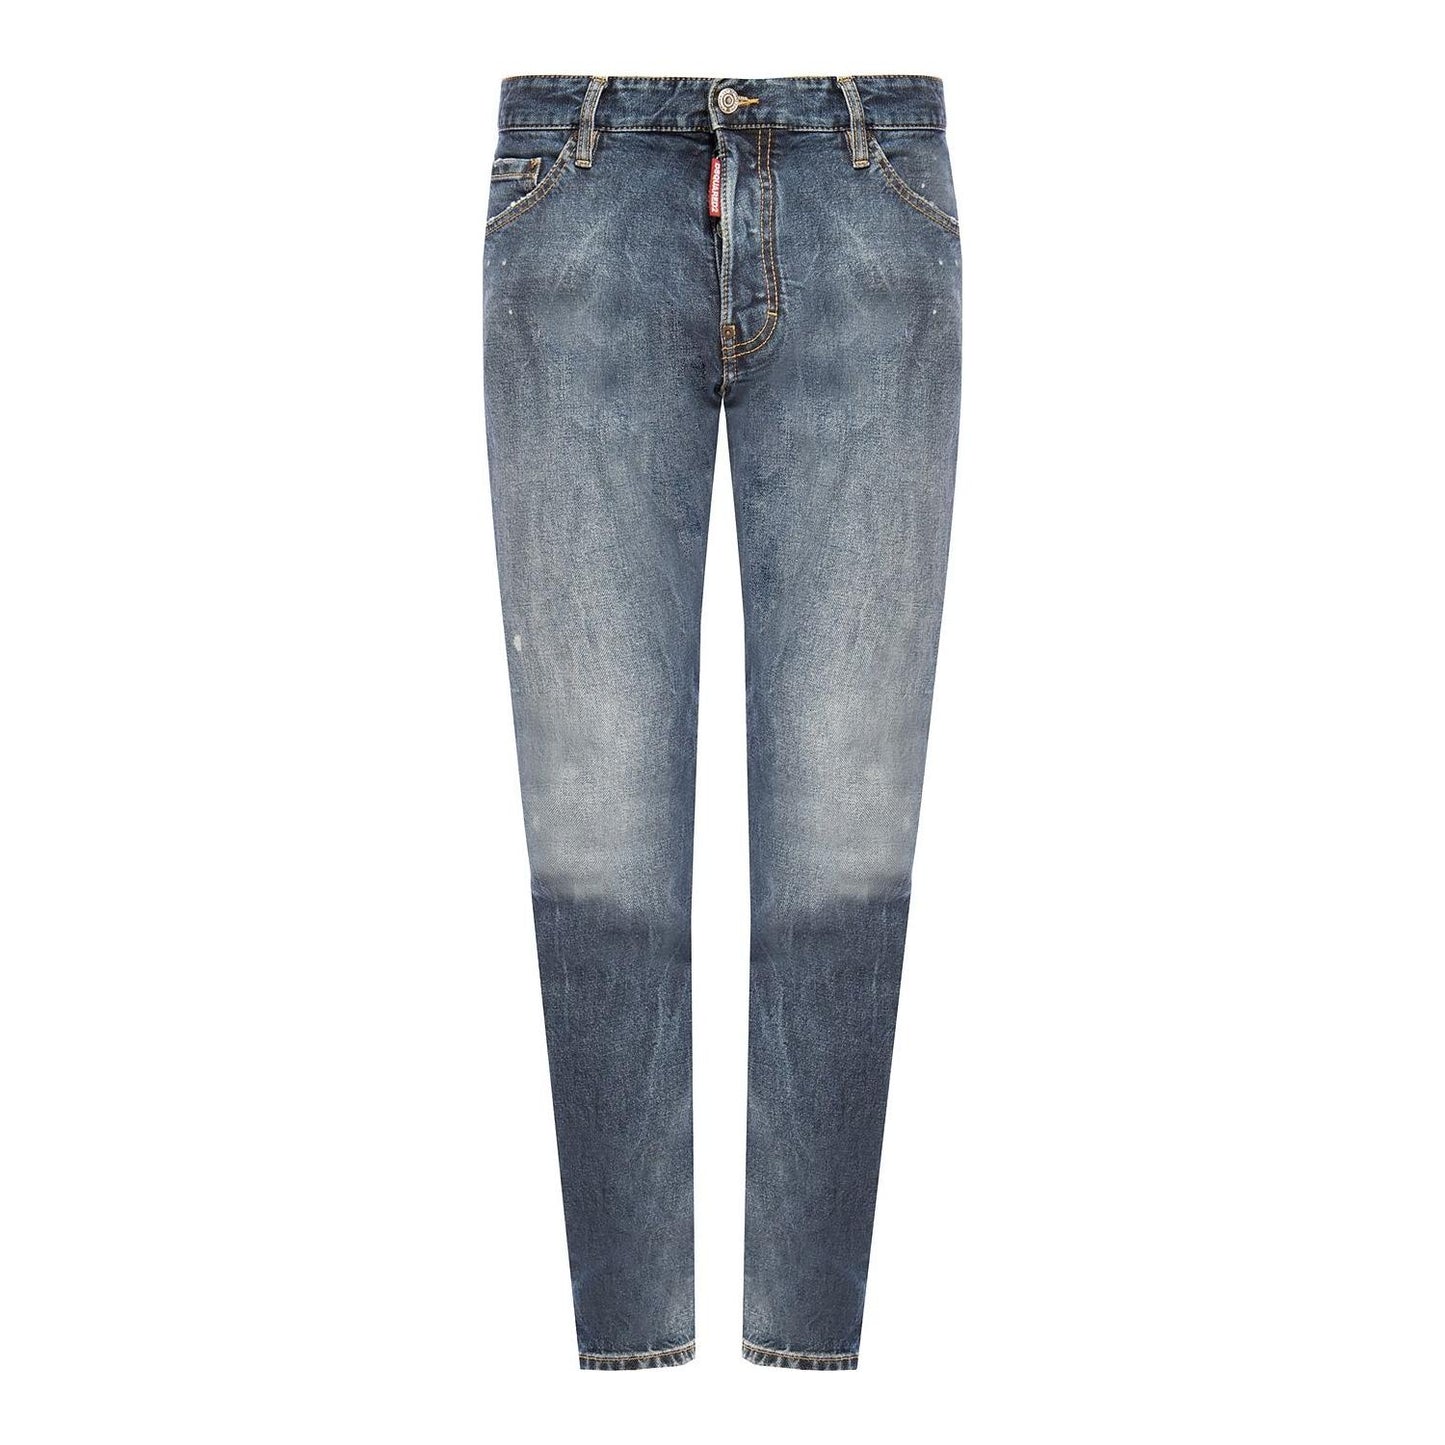 Dsquared² Blue Cotton Jeans & Pants blue-cotton-jeans-pants-3 stock_product_image_4218_1452490902-e6f0ff46-f57_d1c1a8f9-8f70-4f2a-8789-7b70ed5fdba3.jpg